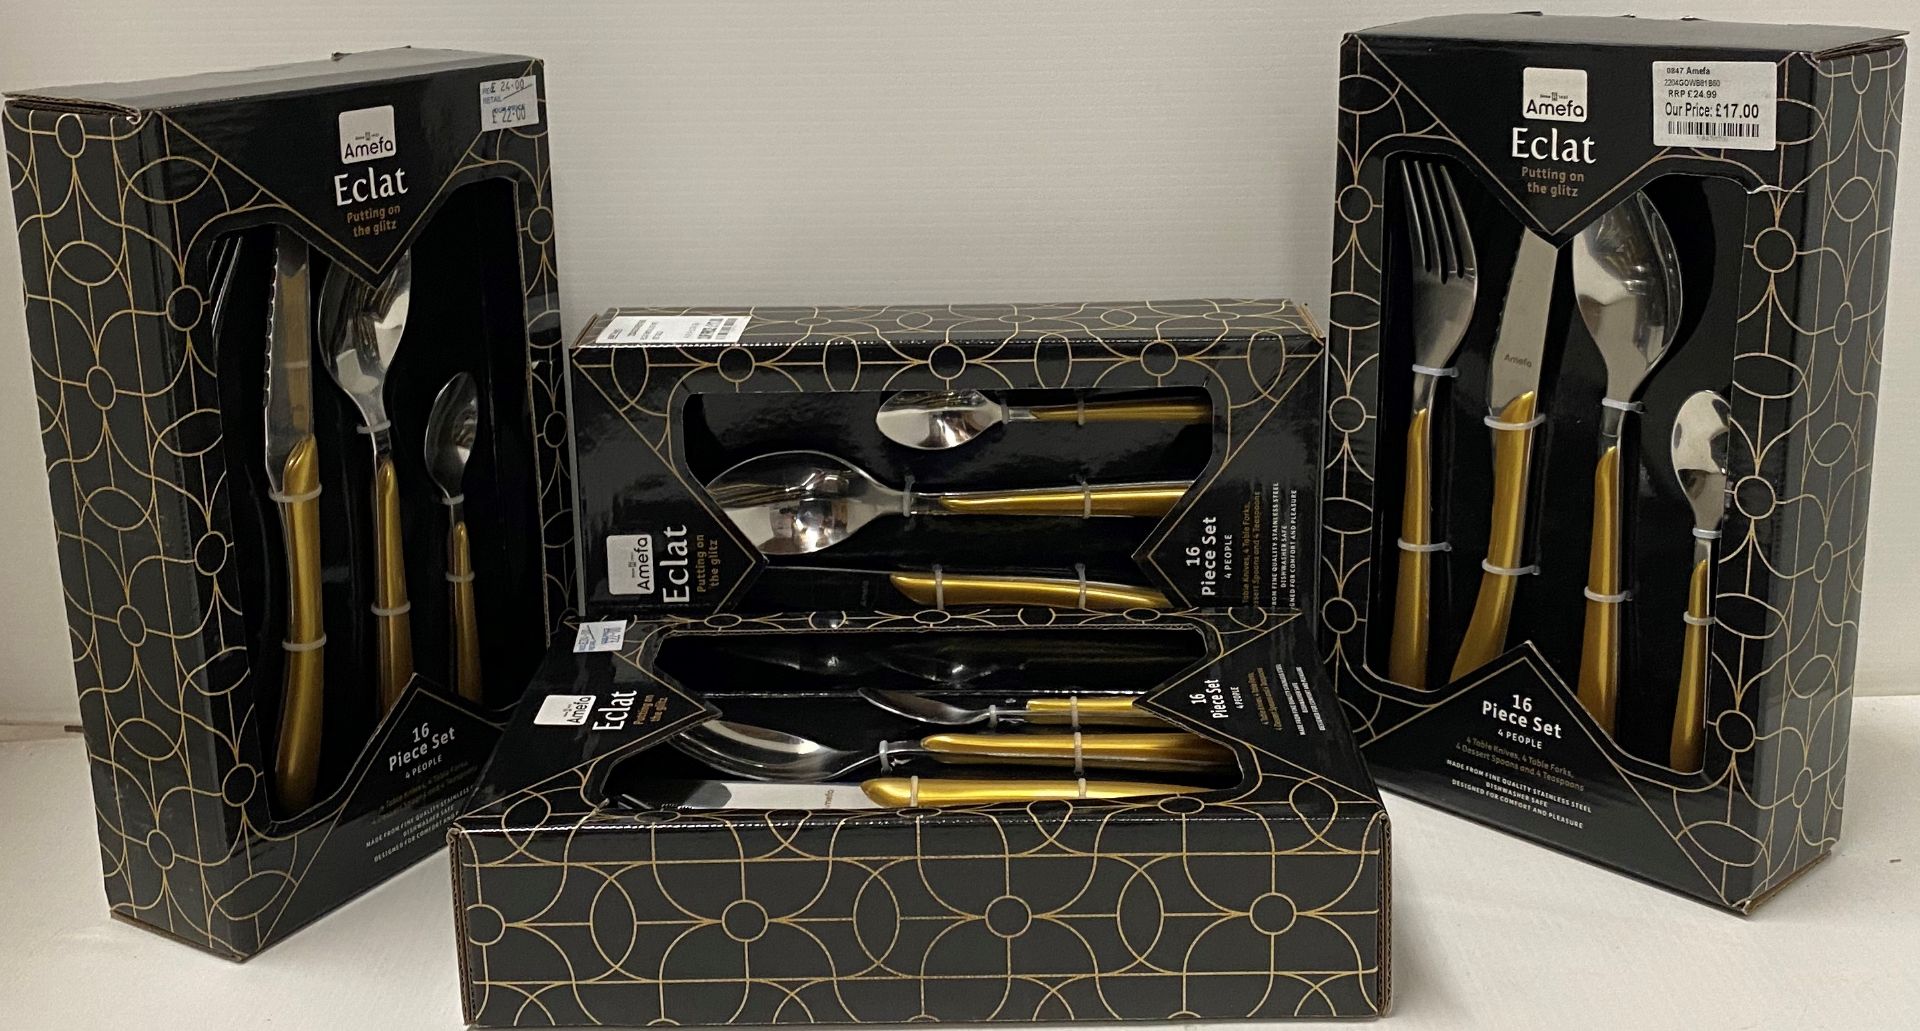 4 x Amefa Eclat Gold 16 piece cutlery sets RRP £24.